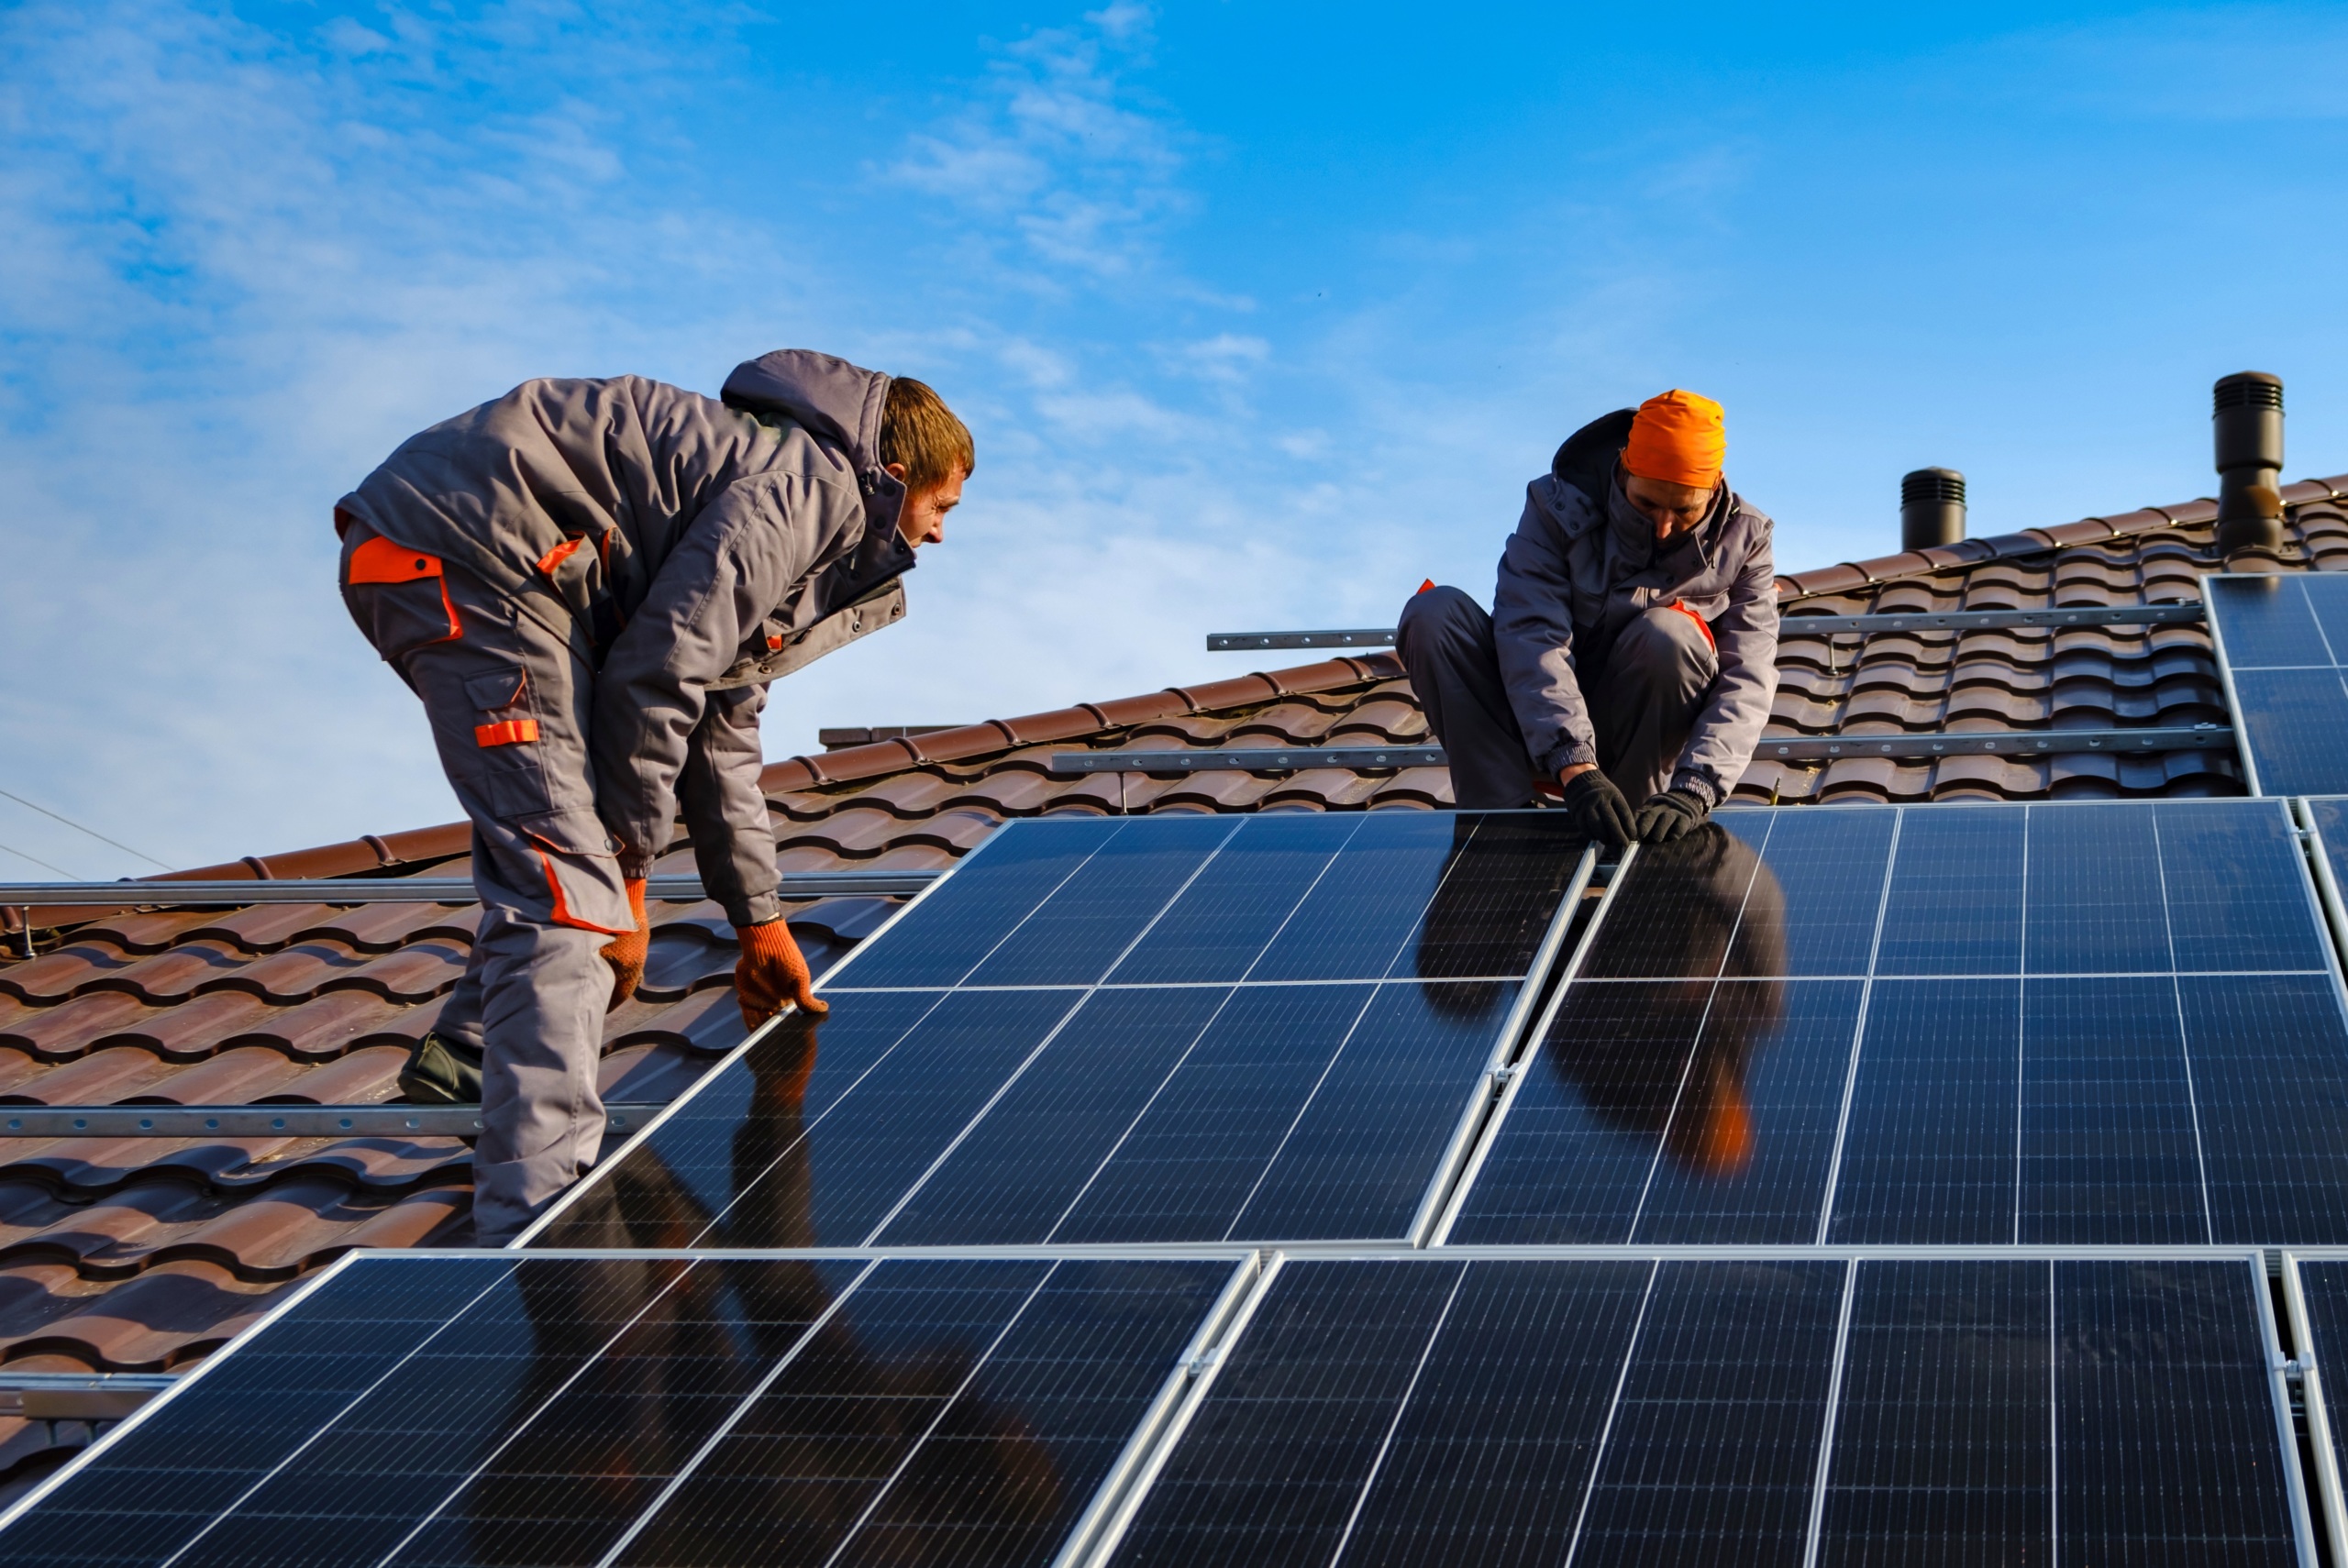 solar-panel-installation-2070531521-AlyoshinE-via-Shutterstock